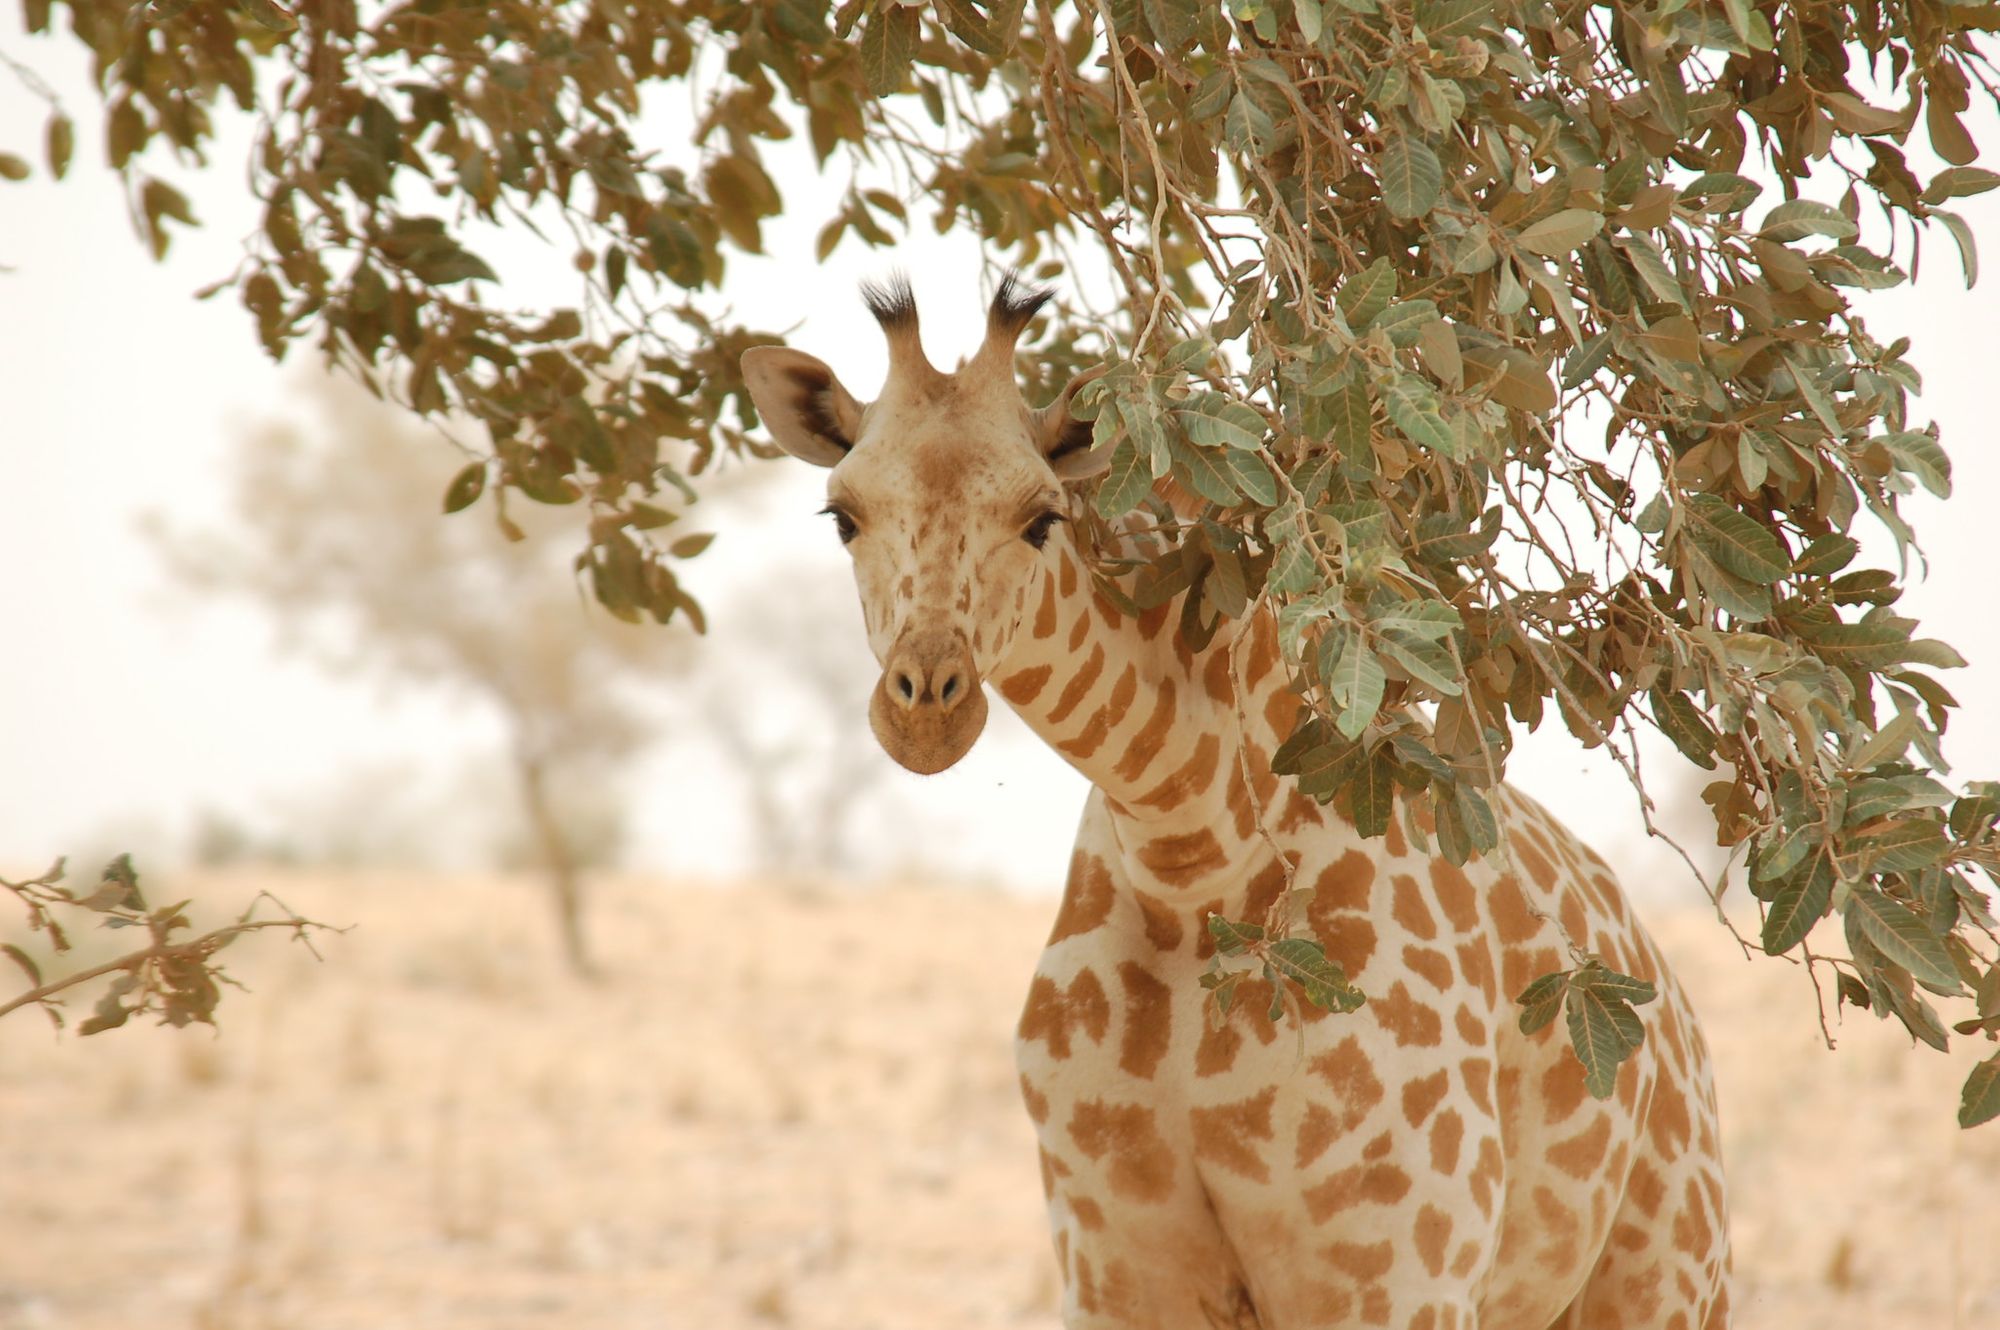 The critically endangered Kordofan giraffe receives help from above